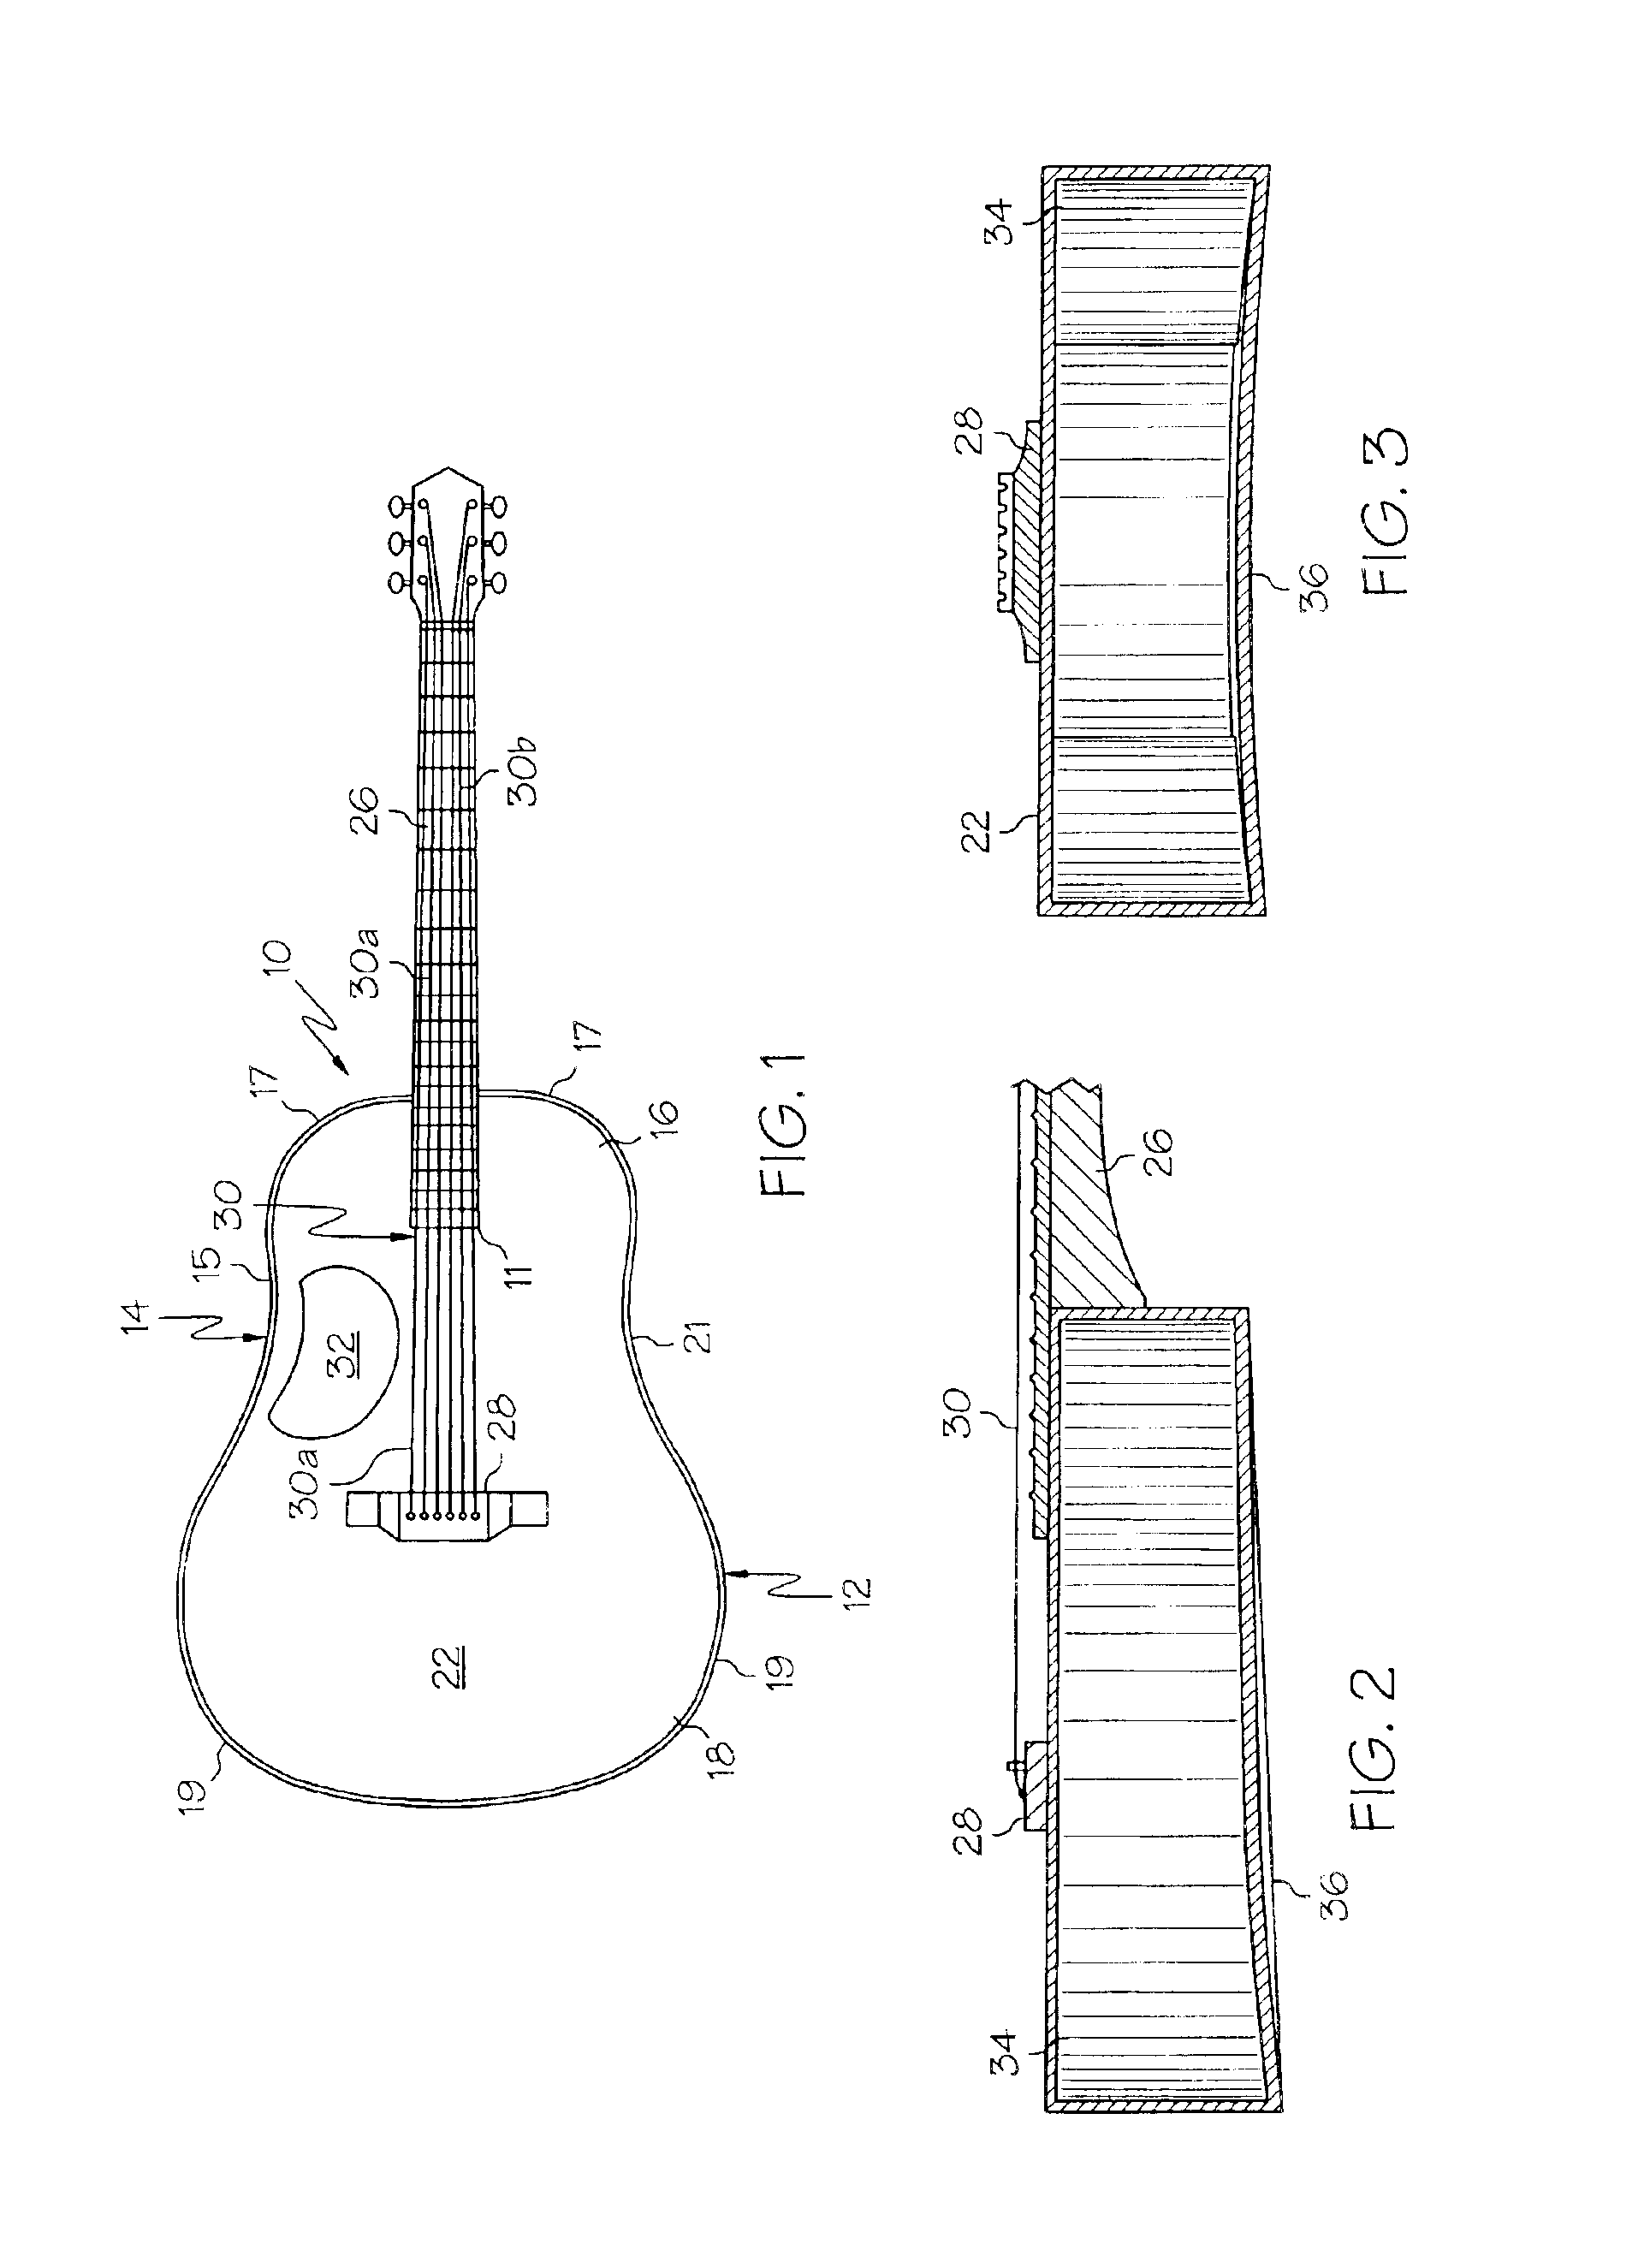 Bracing system for stringed instrument